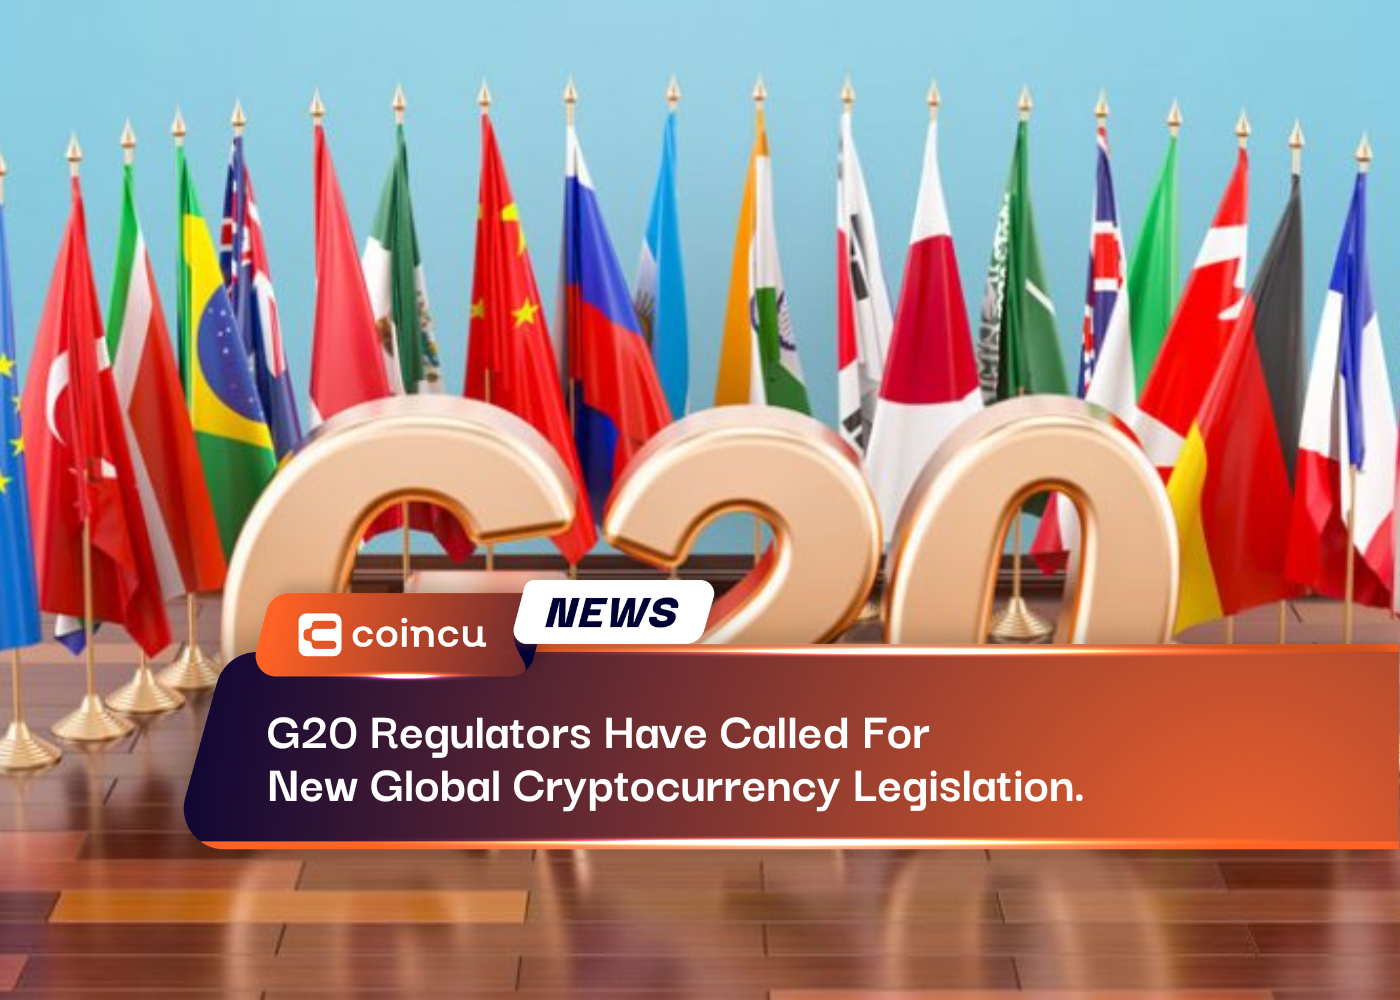 G20 Regulators Have Called For New Global Cryptocurrency Legislation.